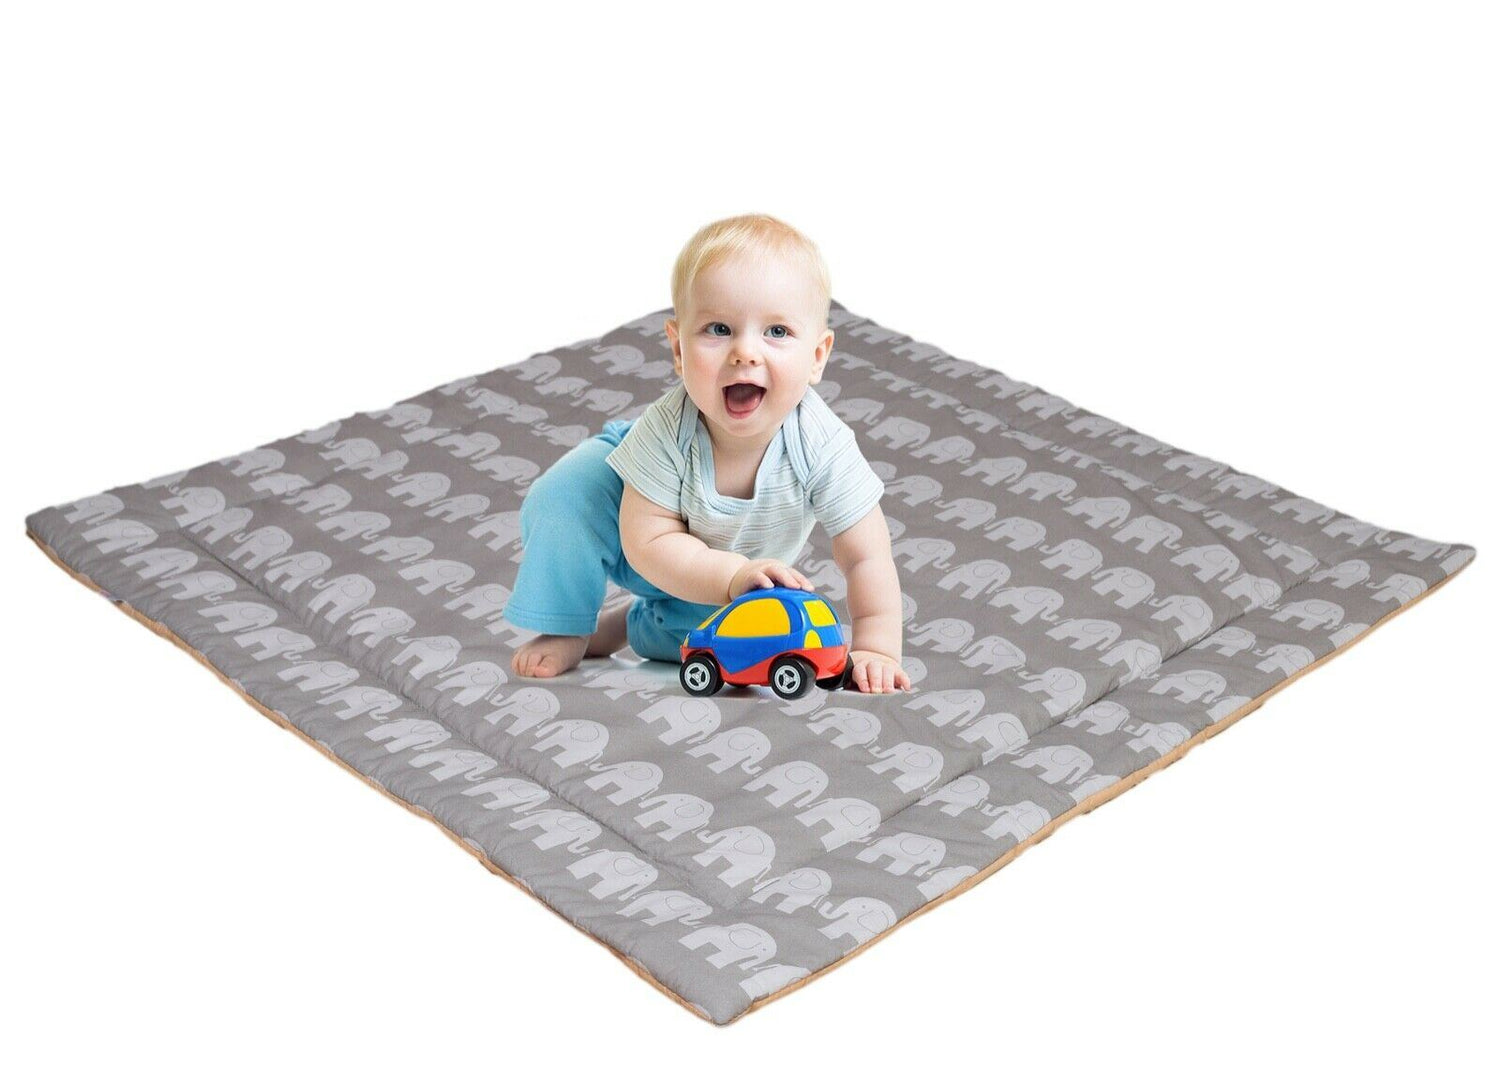 Teepee floor Double sided Cotton Padded Baby Kids Play Mat Happy savannah